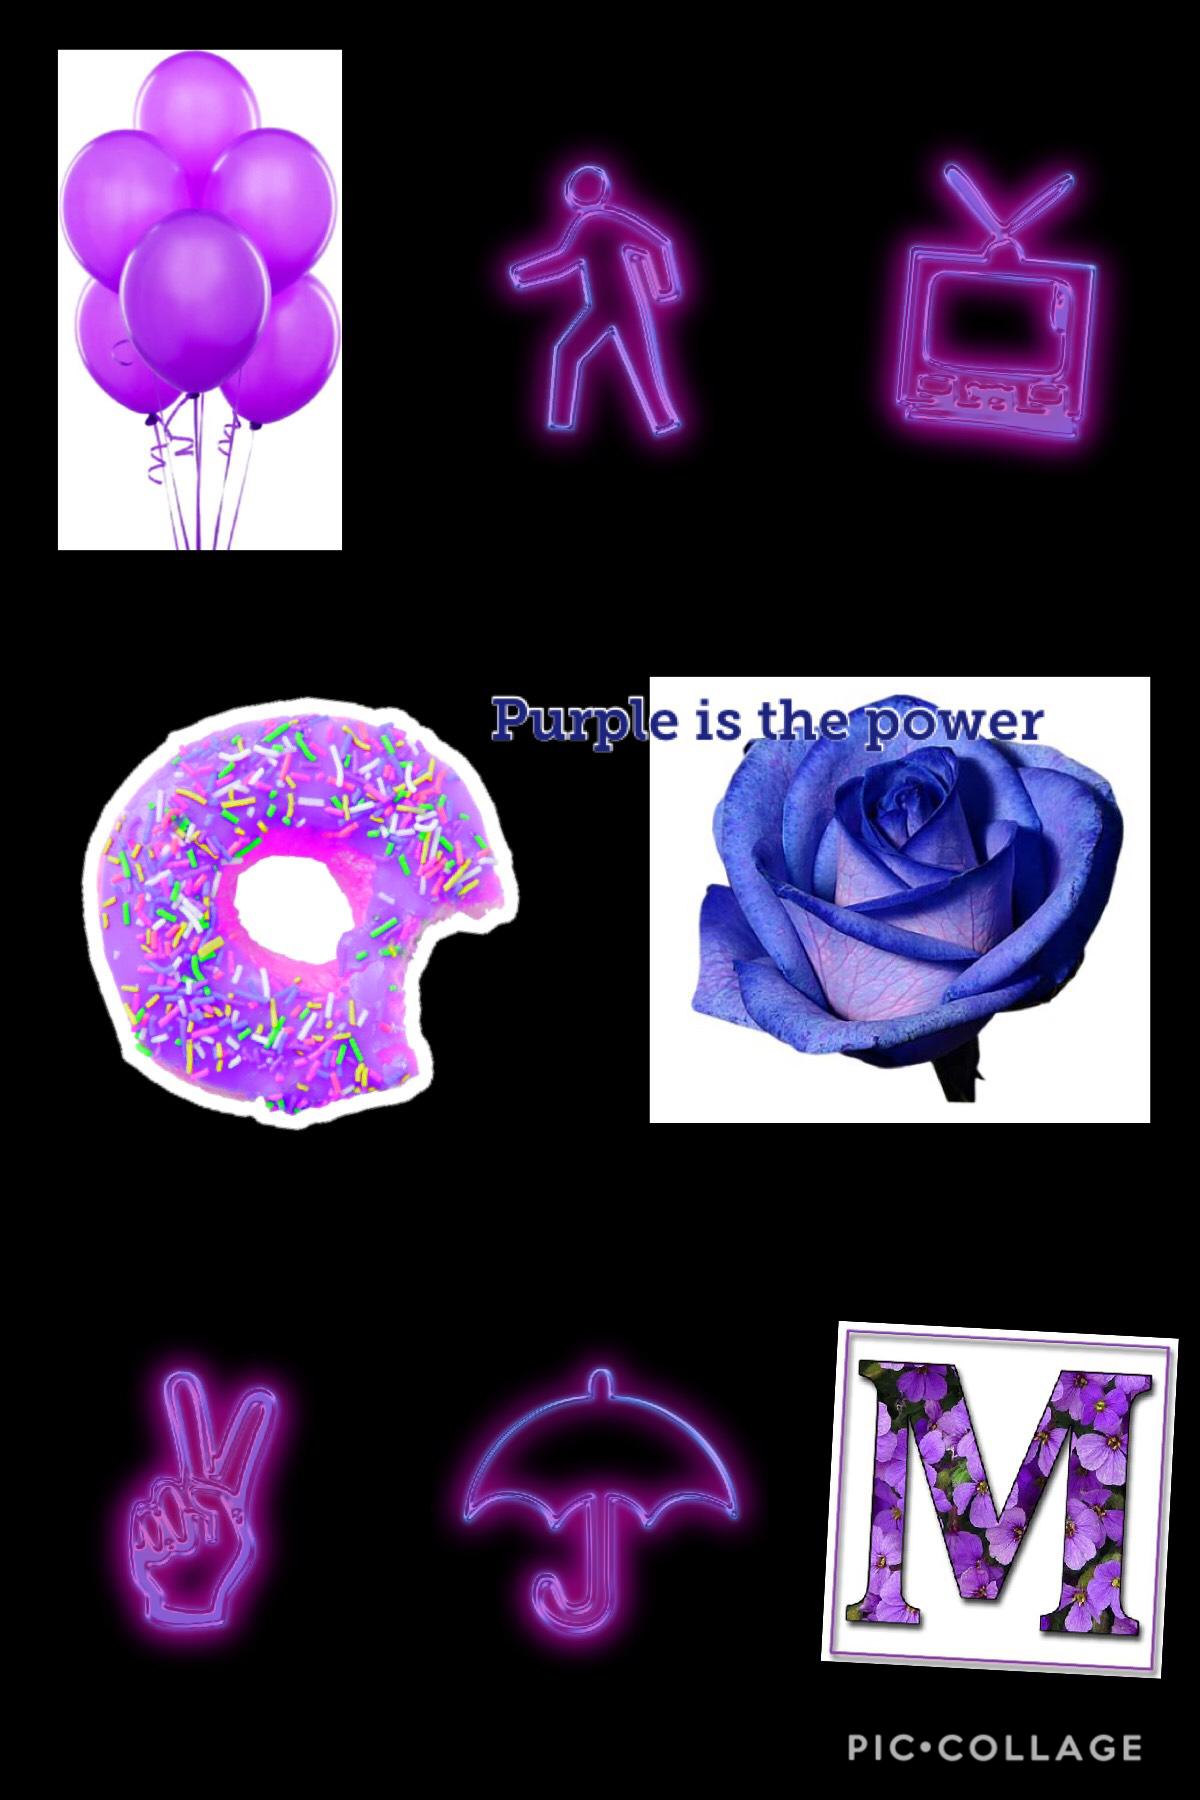 Purple is the power